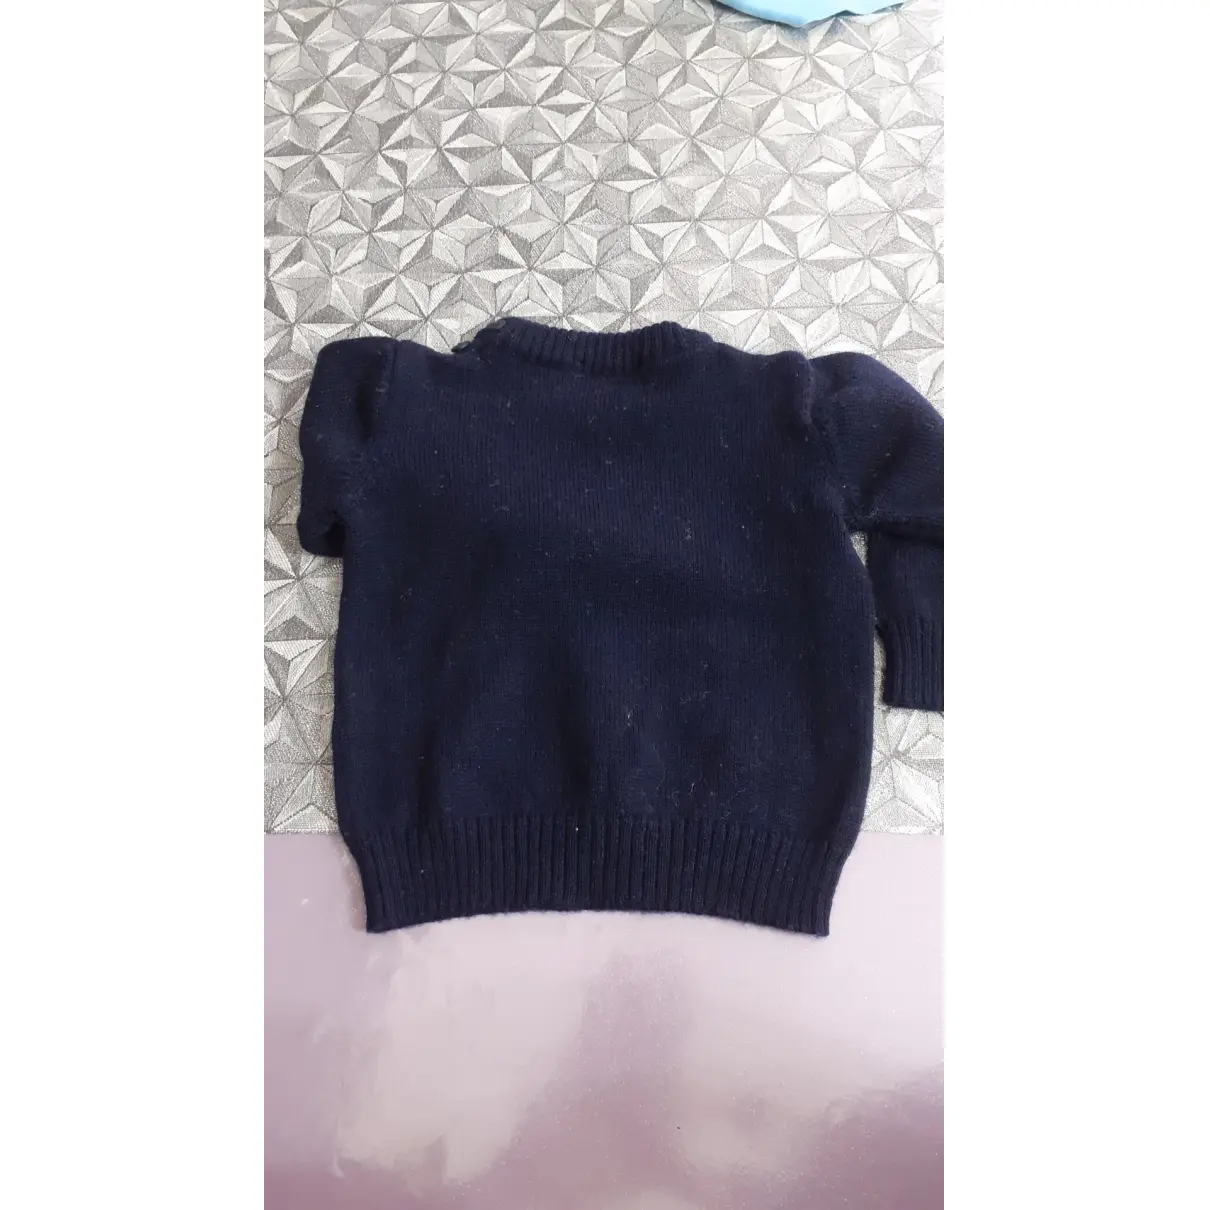 Buy Armani Baby Wool sweater online